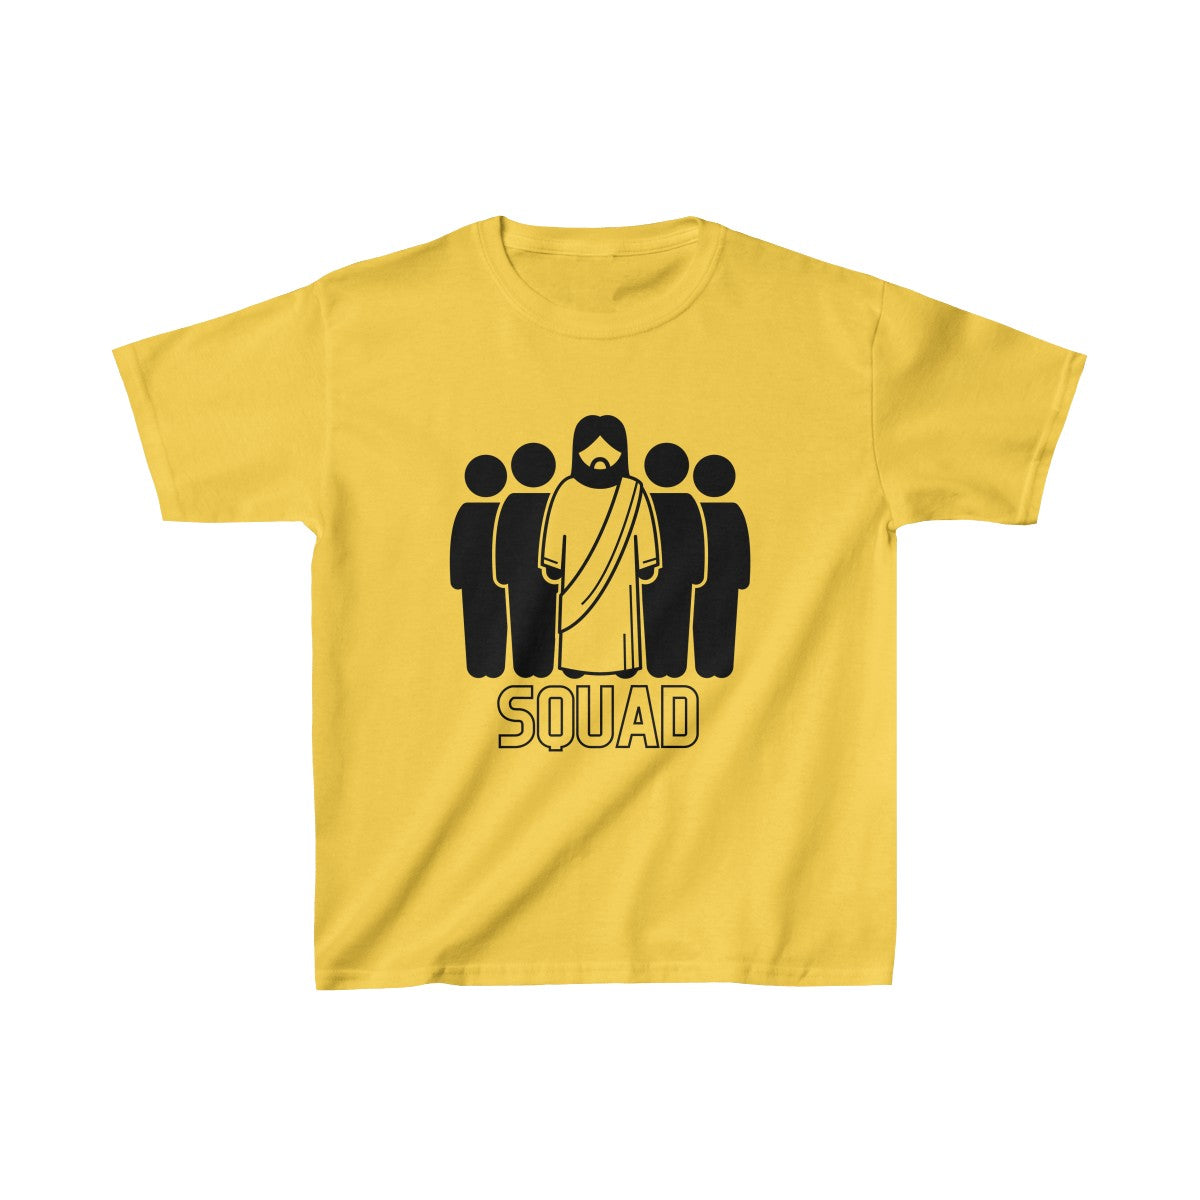 Squad - Youth Shirt | LifeSpring Shirts - LifeSpring Shirts